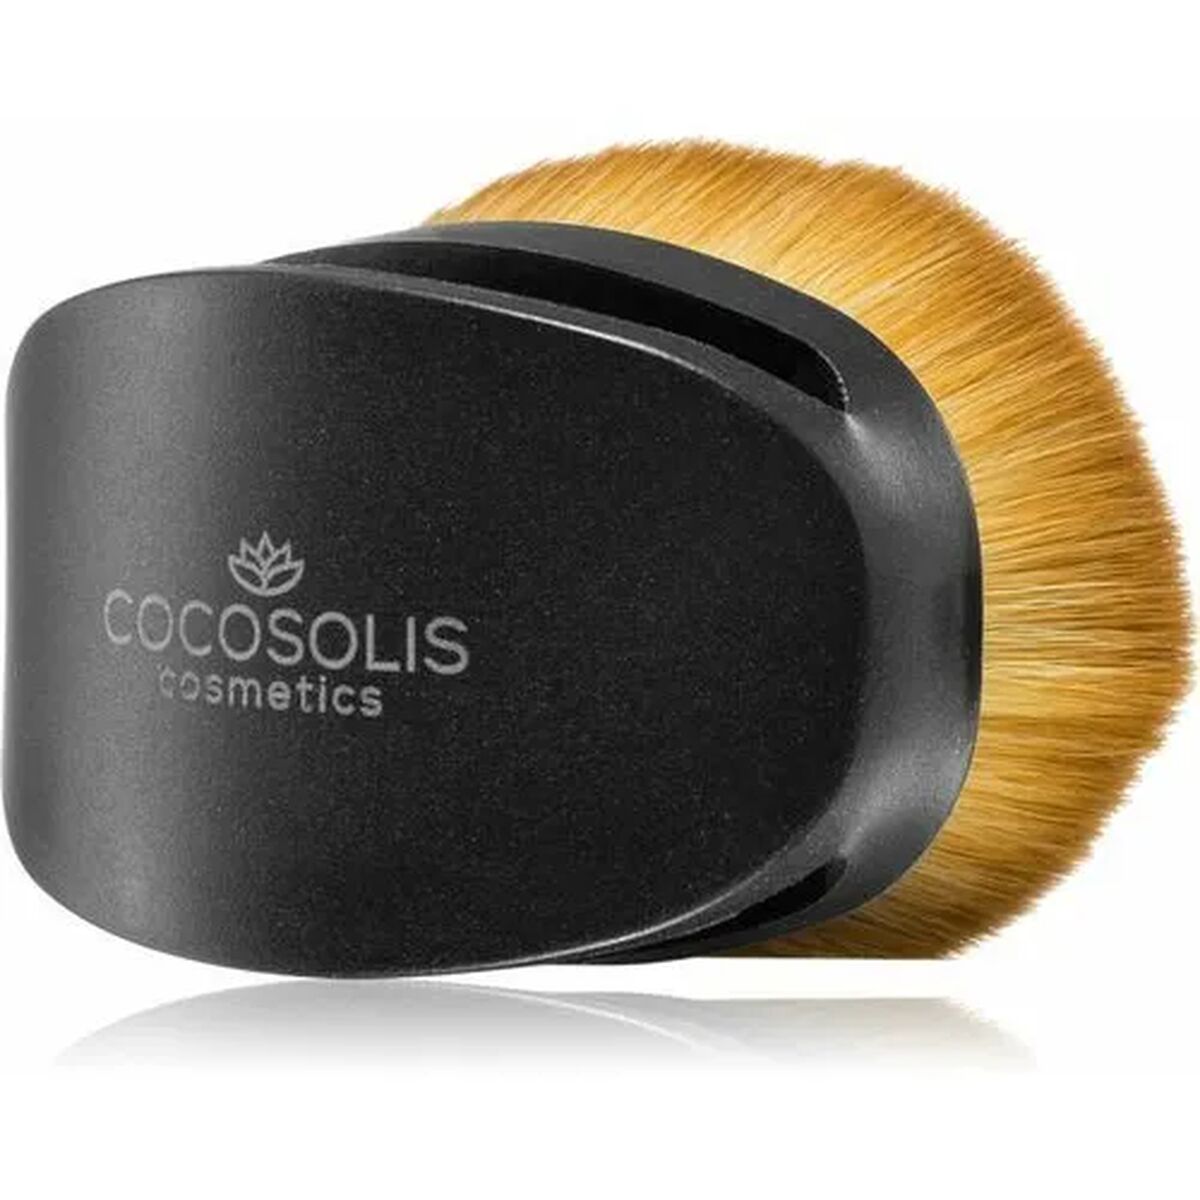 Kaufe Make-Up Pinsel Cocosolis bei AWK Flagship um € 48.00